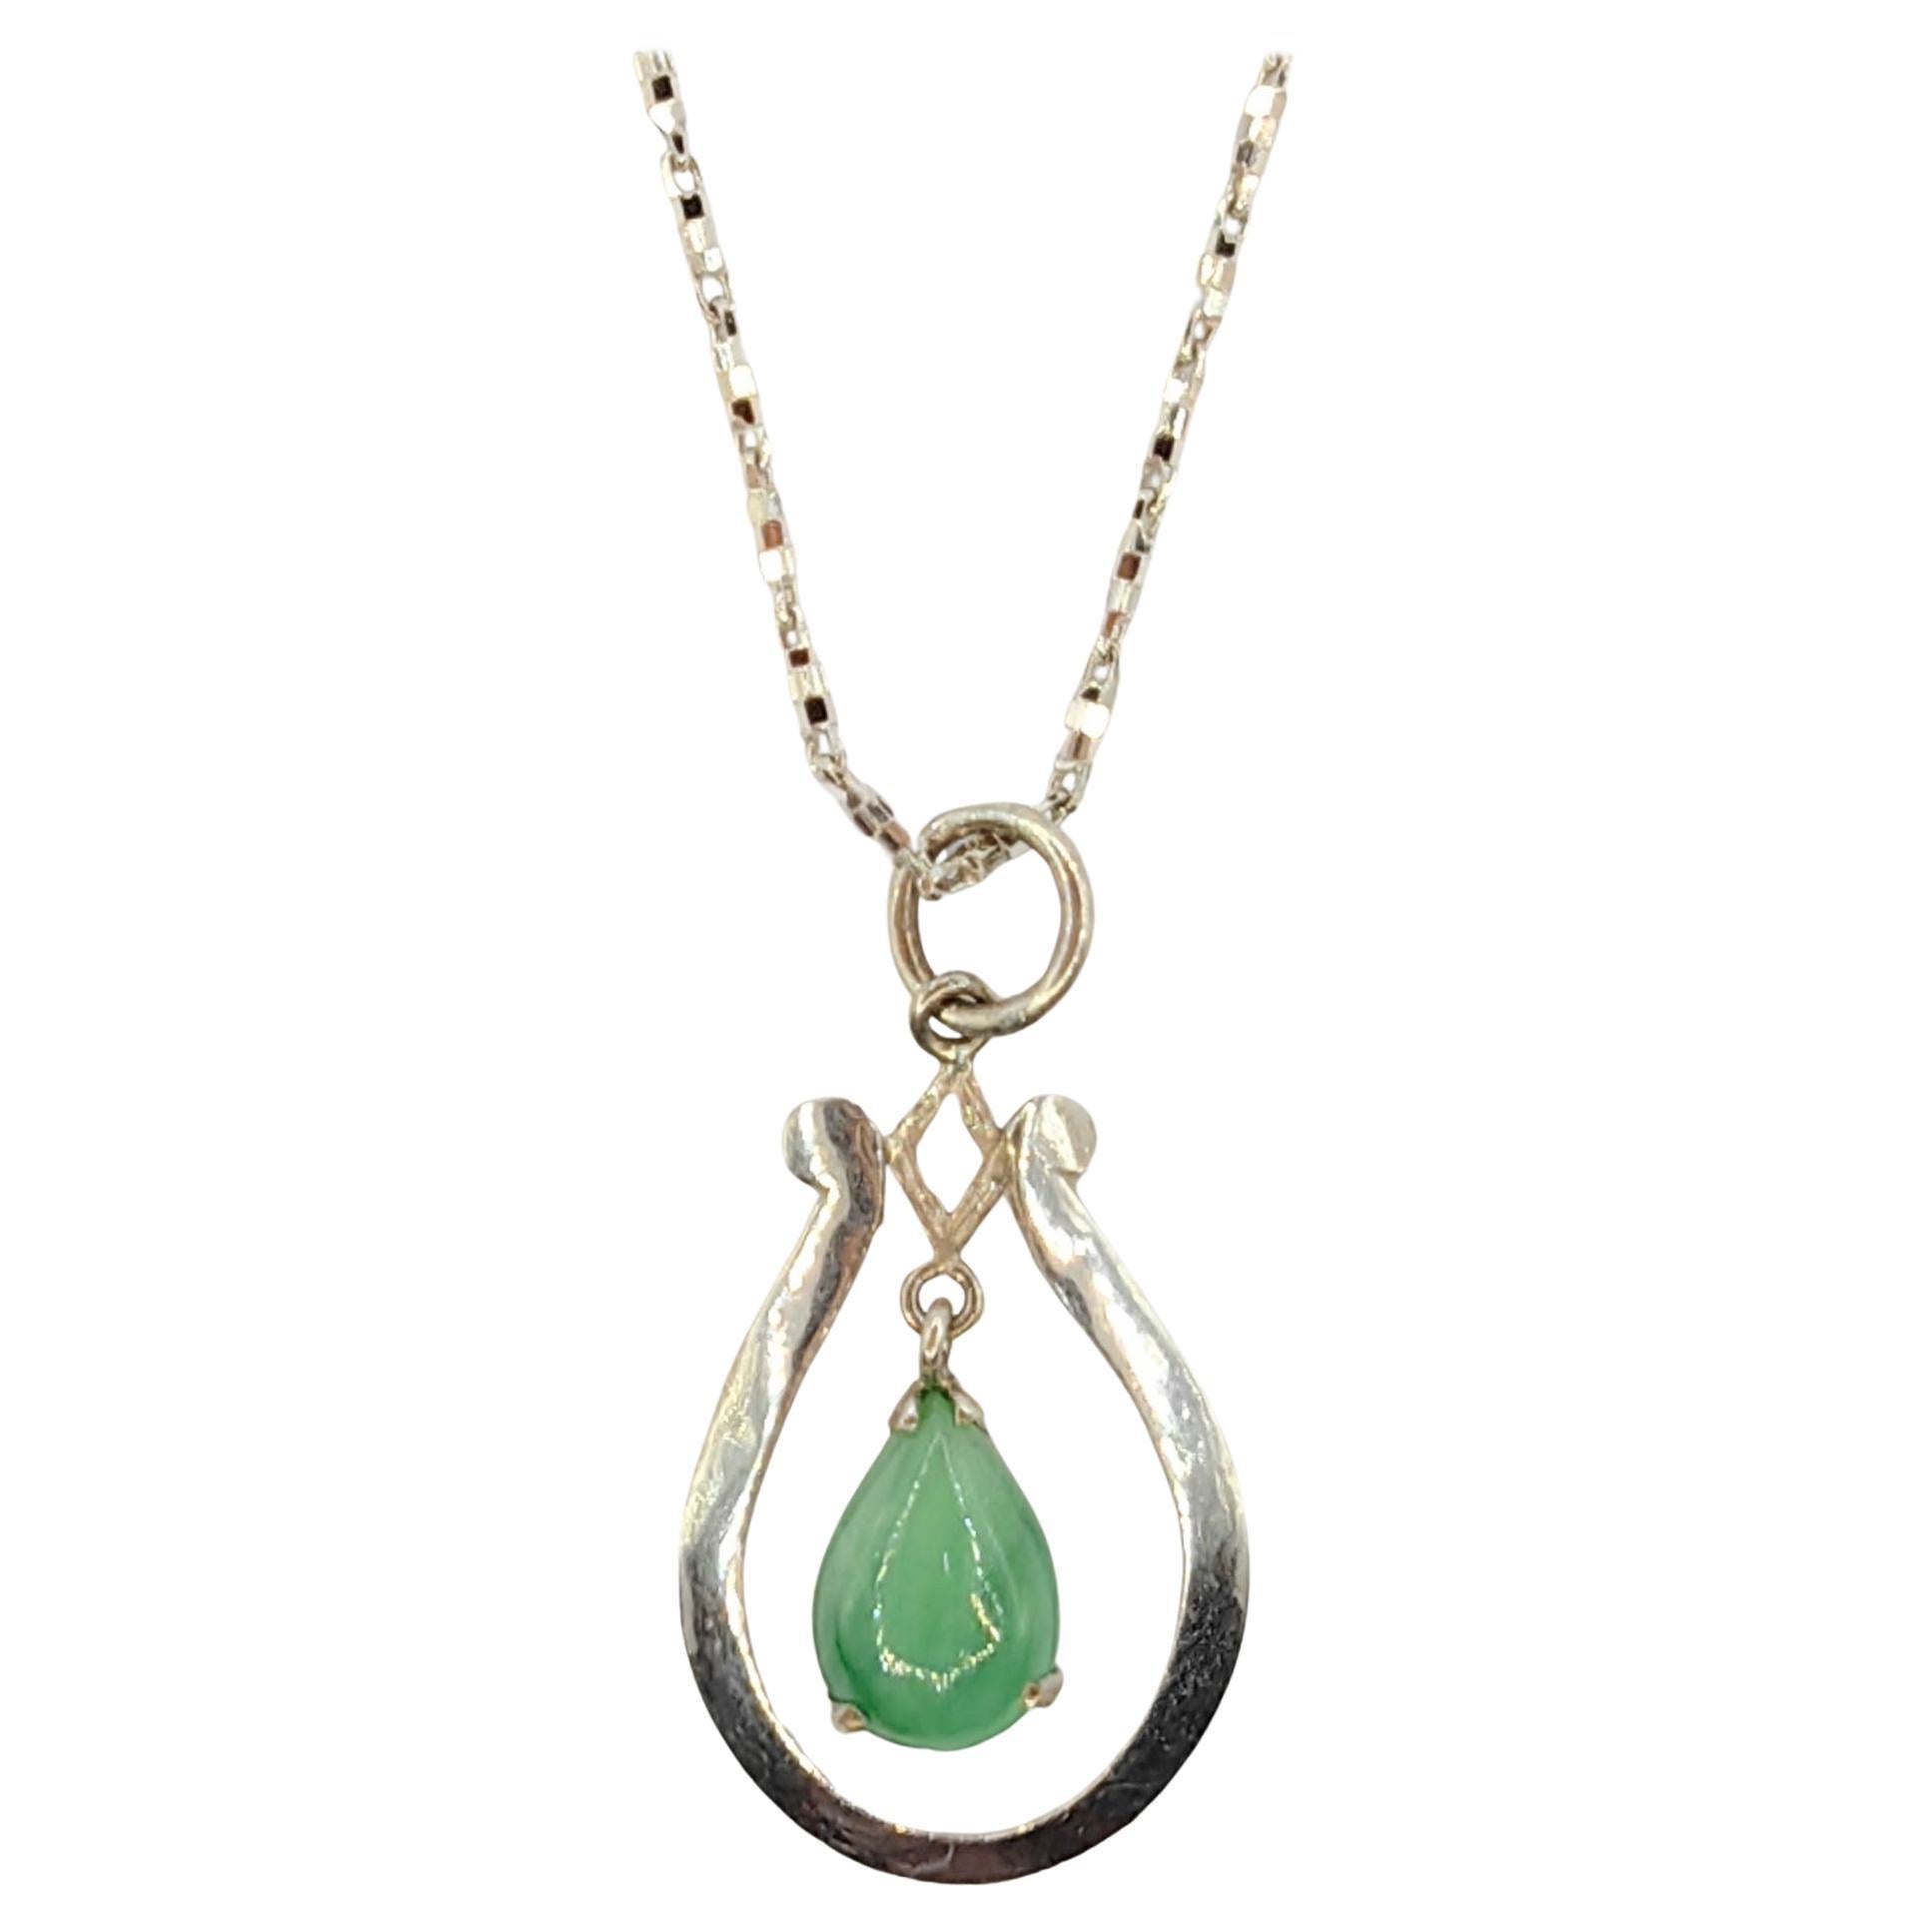 Vintage Pear Shaped Teardrop Jade Pendant in Sterling Silver